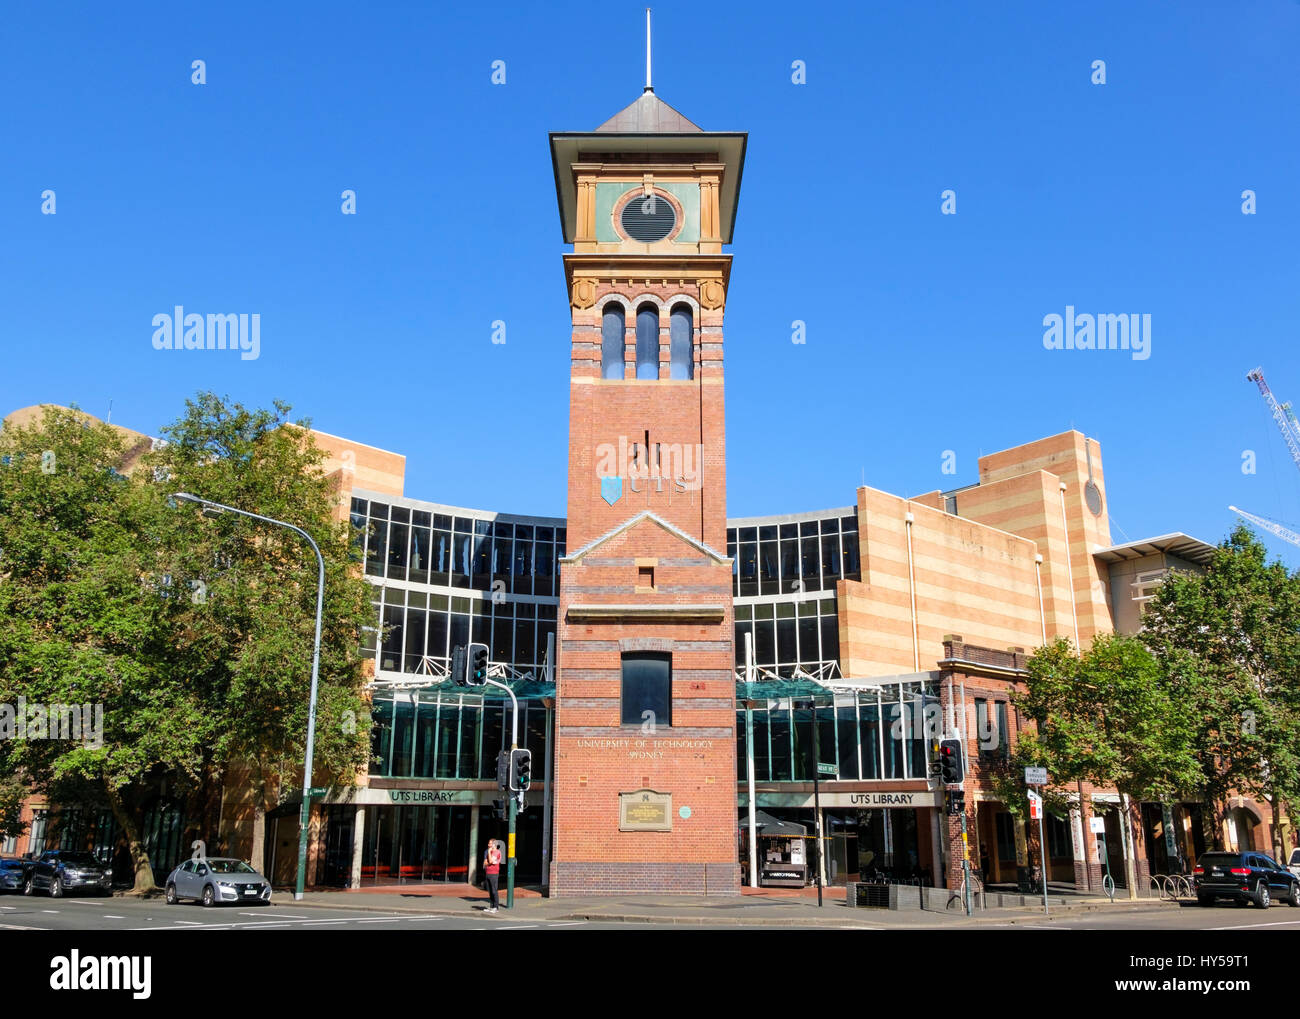 UTS (University of Technology, Sydney) Haymarket Campus - university library and clock tower. Quay Street, Ultimo. Australian university architecture Stock Photo